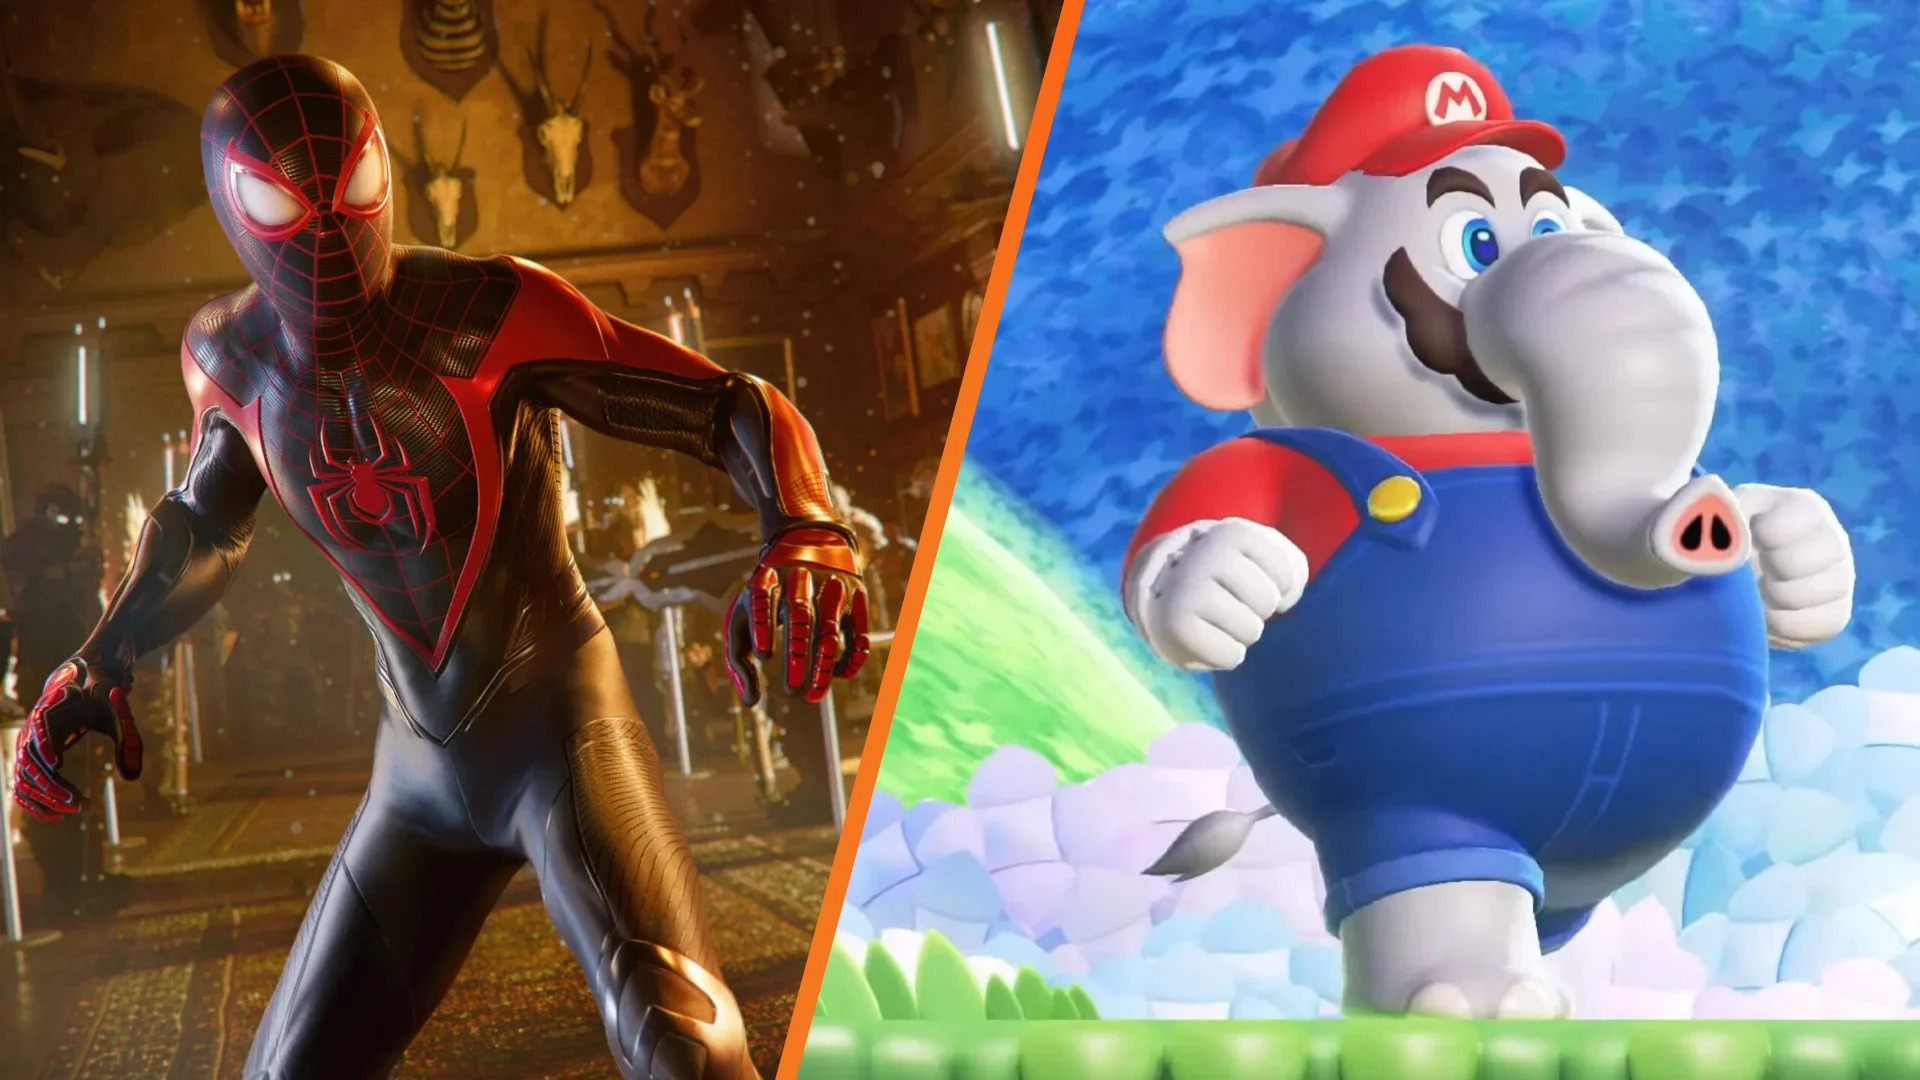 Super Mario Wonder برای دومین هفته در صدر جدول فروش بریتانیا قرار گرفت